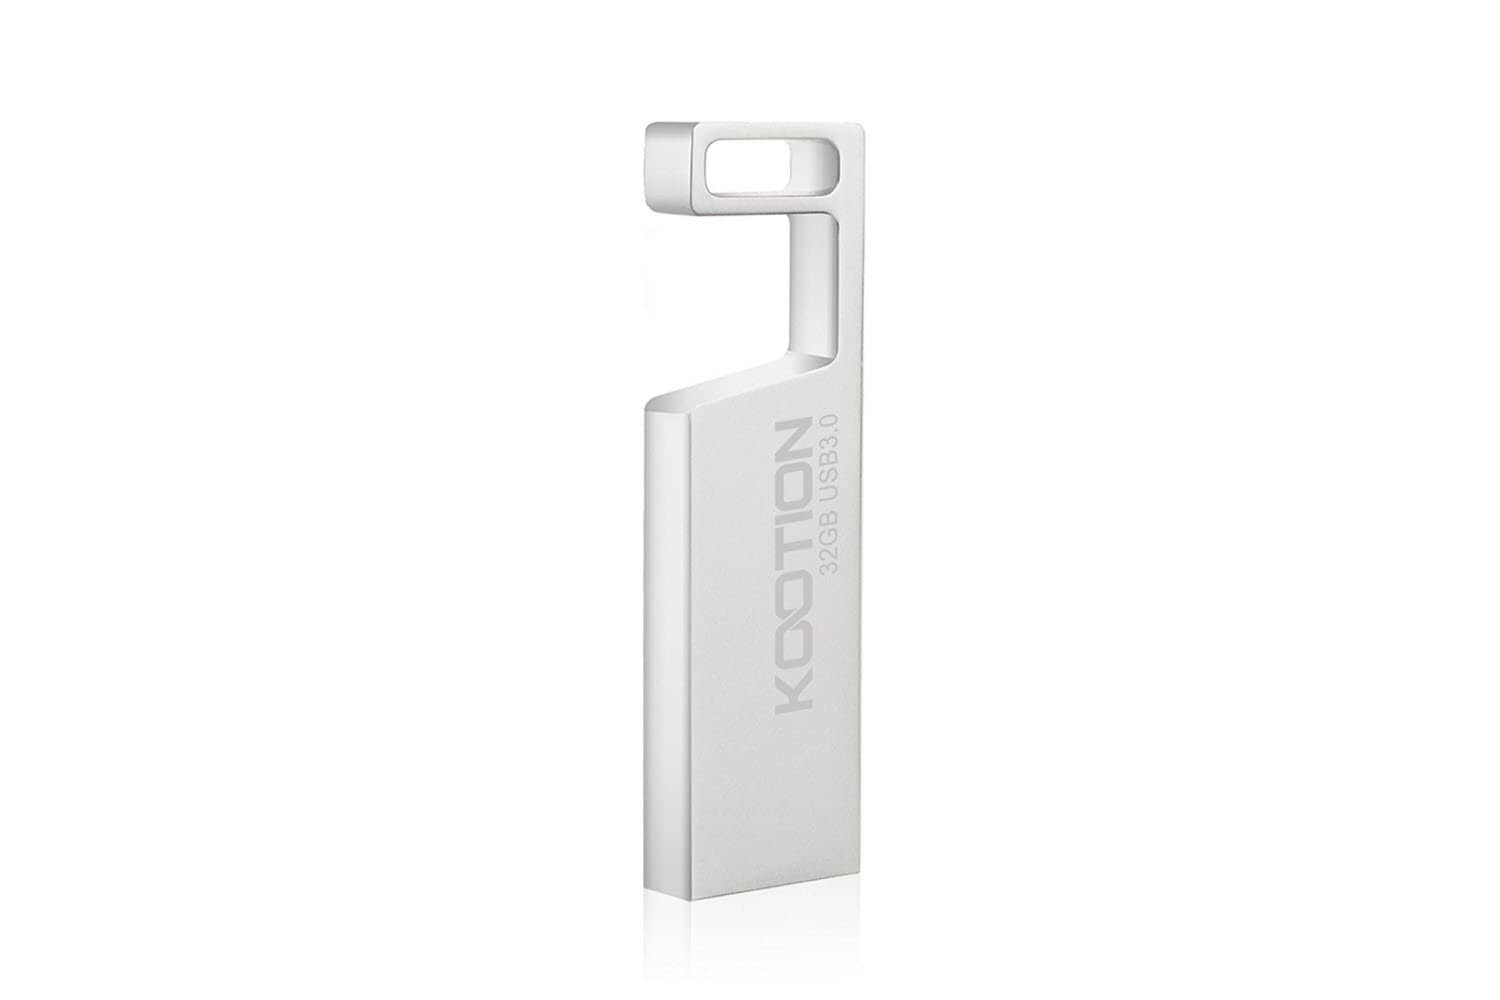 KOOTION 32GB USB 3.0 Flash Drive Waterproof